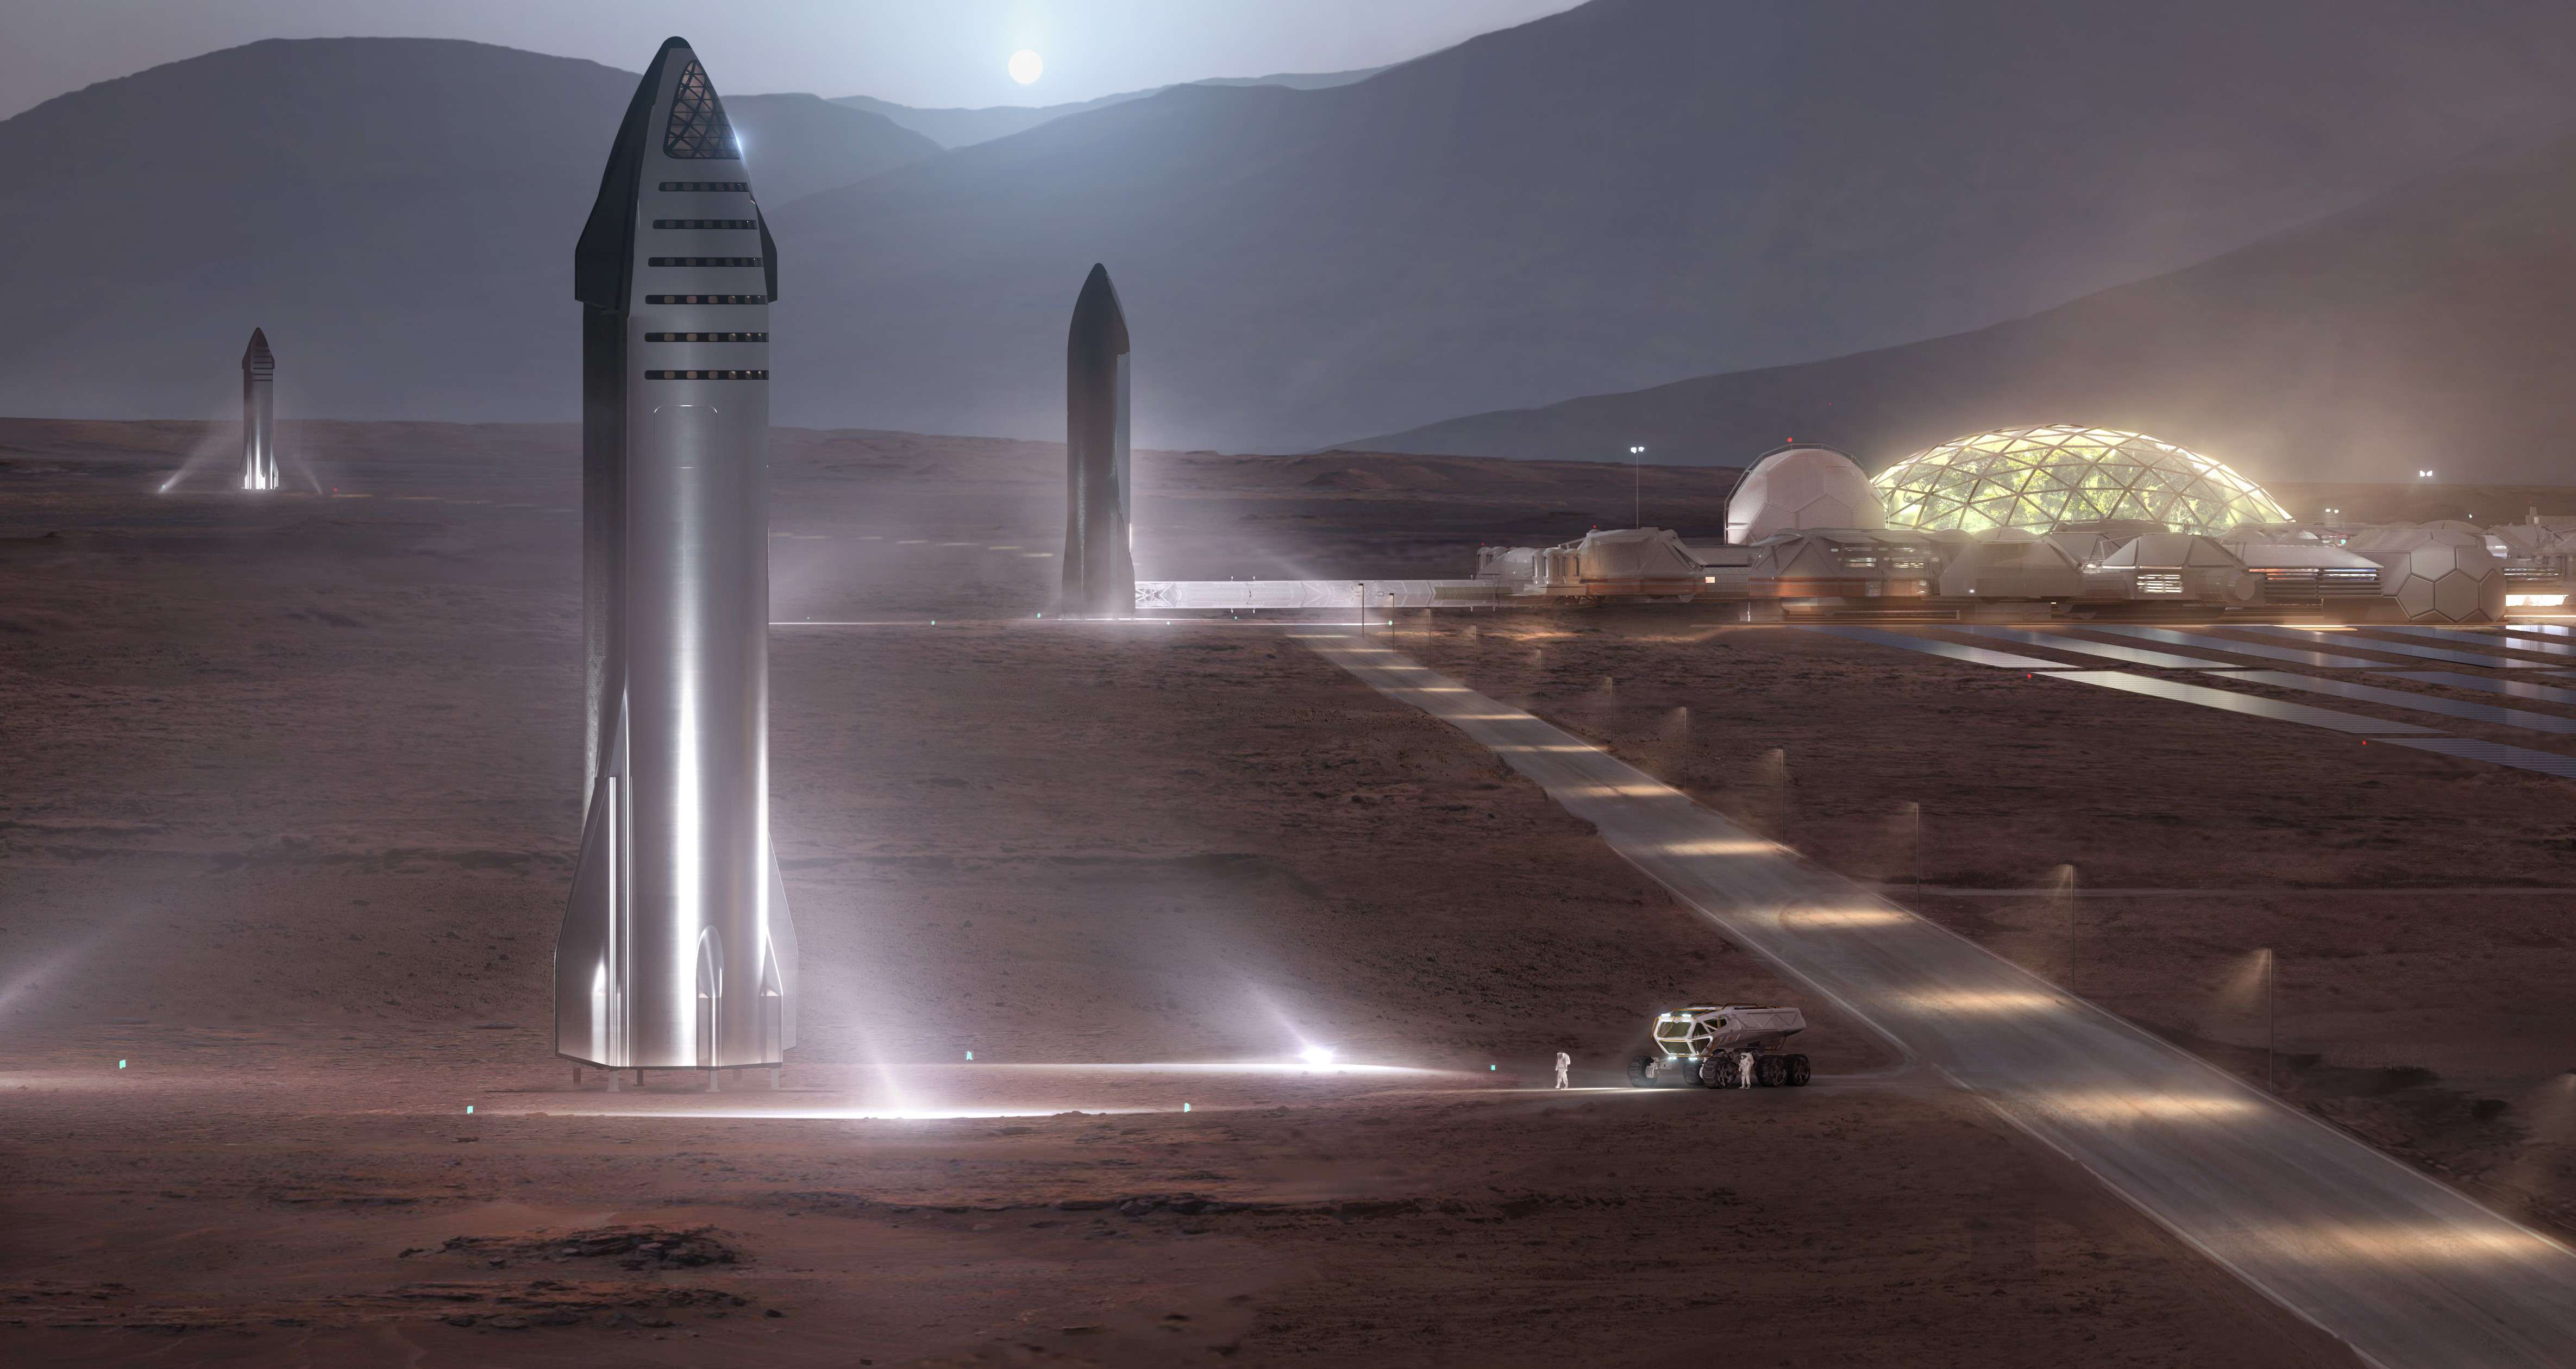 Starship 2019 Mars base render (SpaceX) 1 full crop (c)